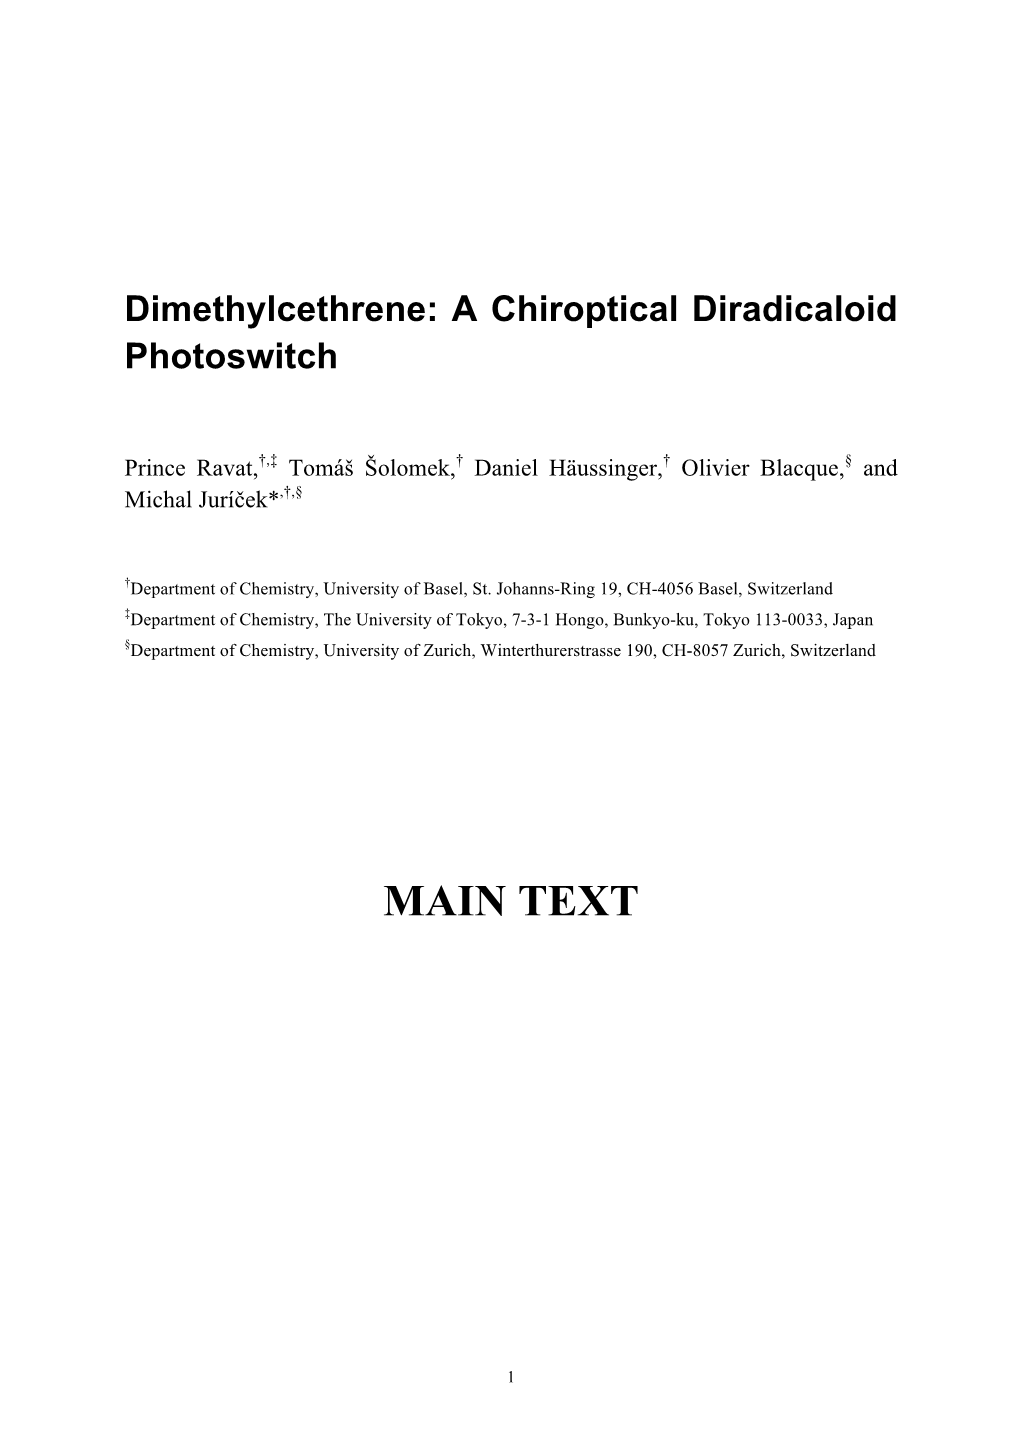 Dimethylcethrene: a Chiroptical Diradicaloid Photoswitch